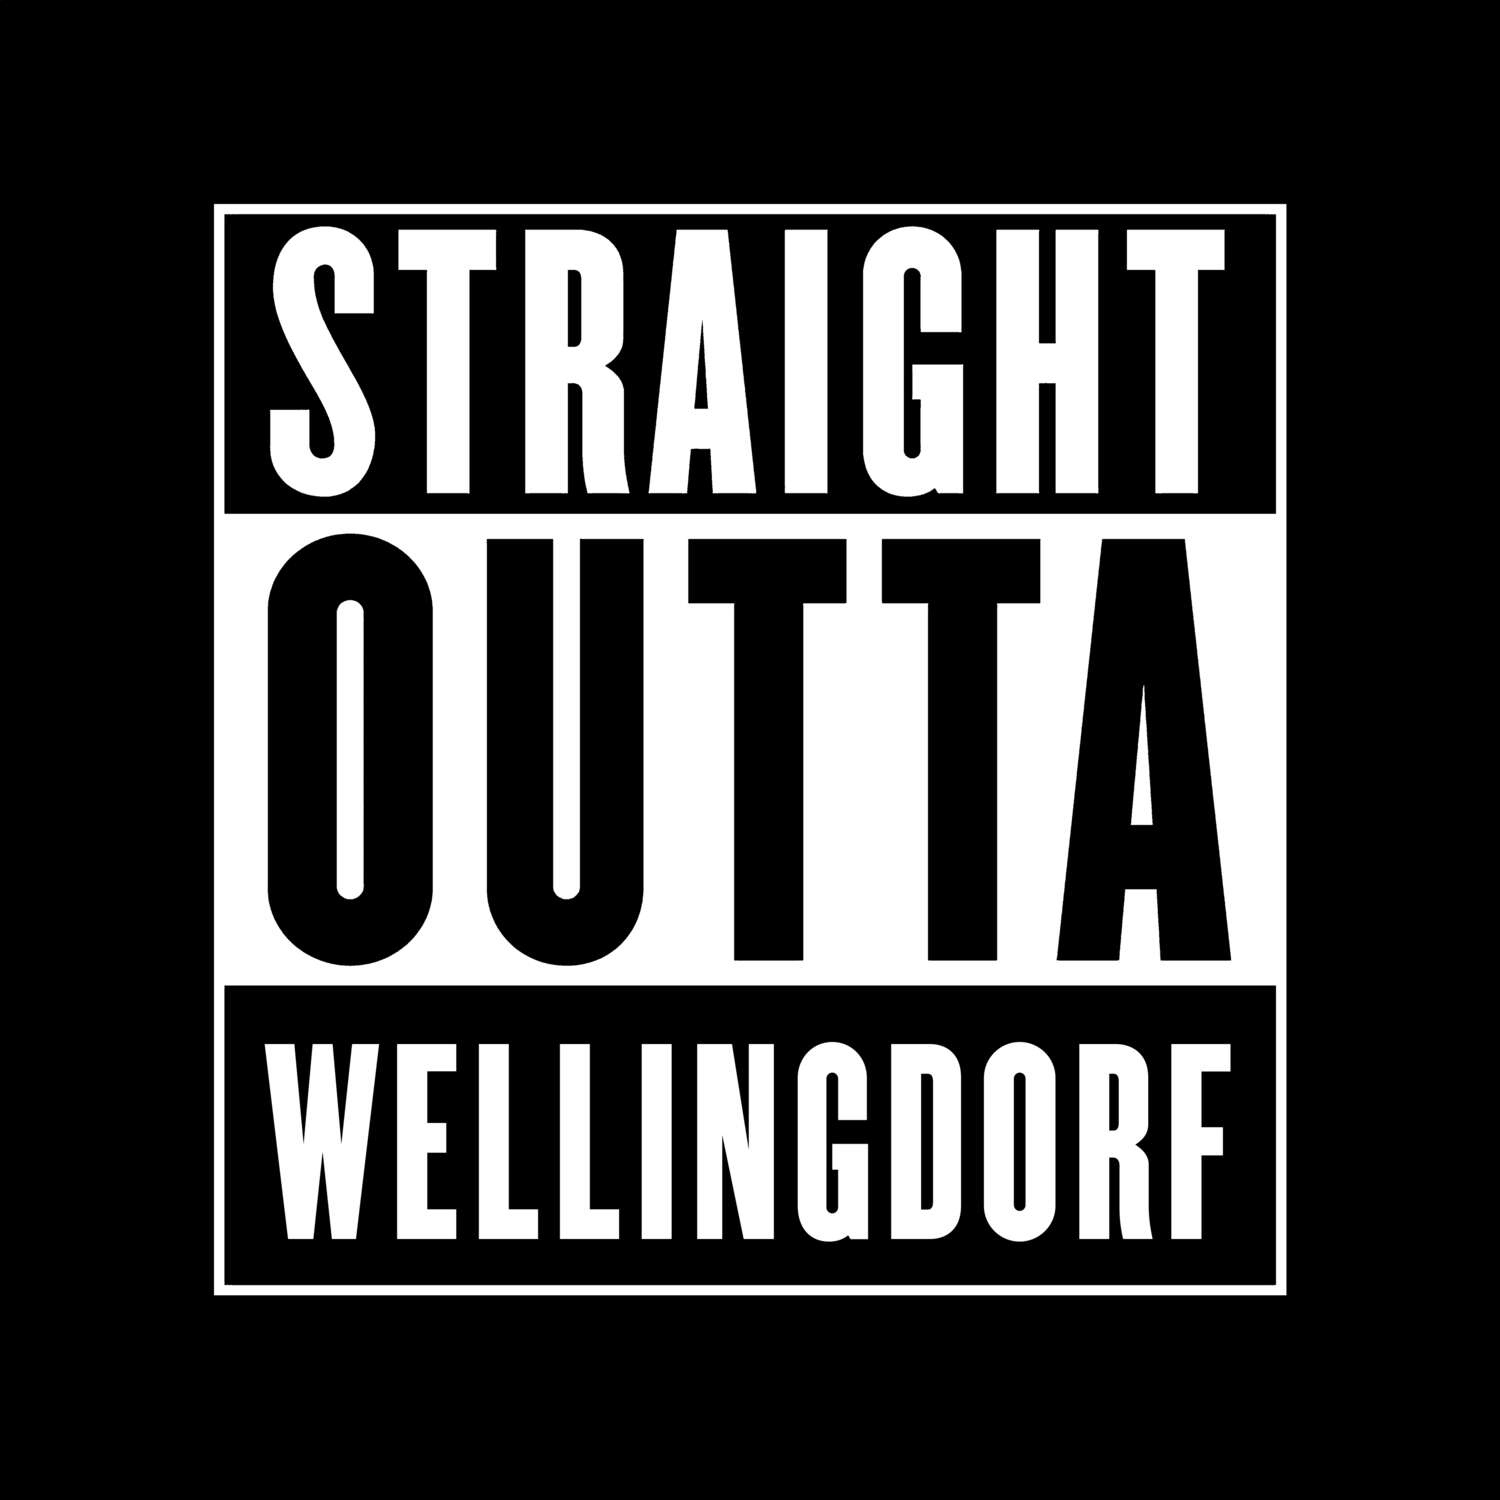 Wellingdorf T-Shirt »Straight Outta«